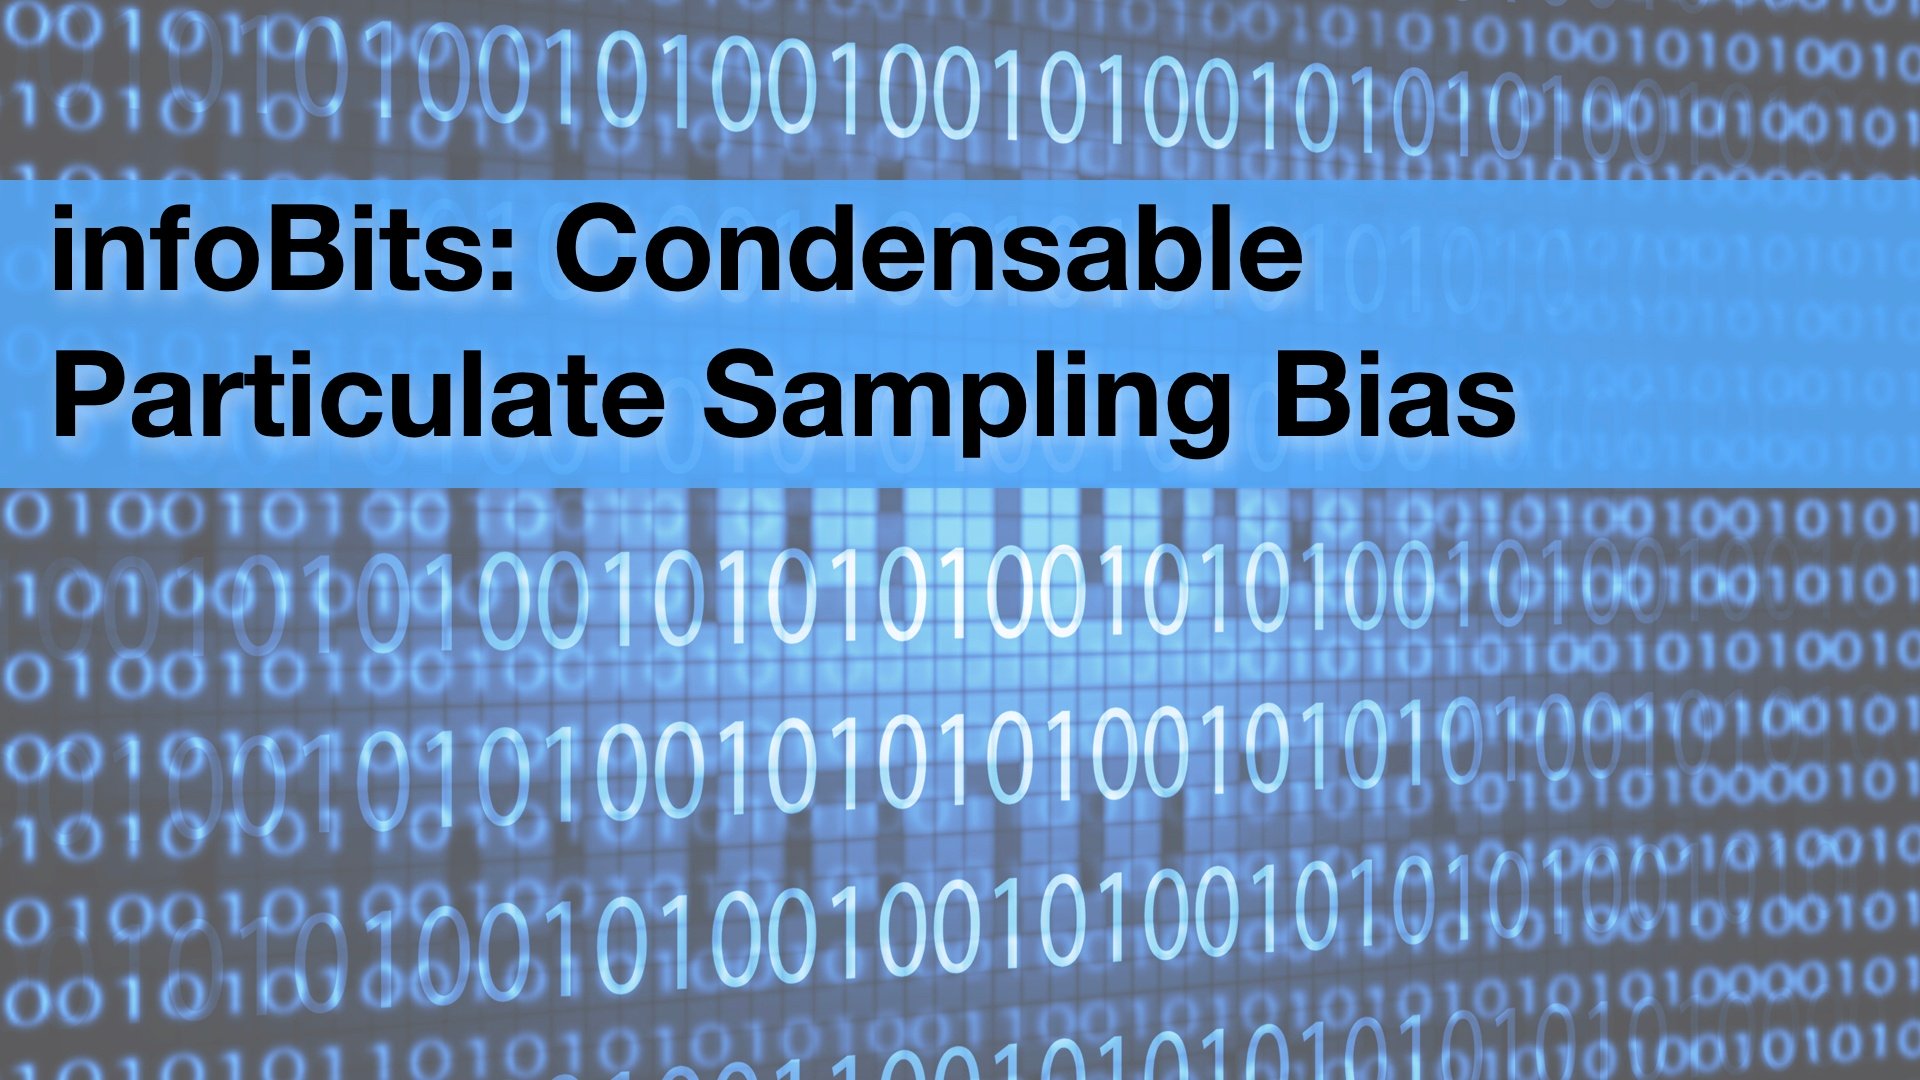 infoBits: Condensable Particulate Sampling Bias